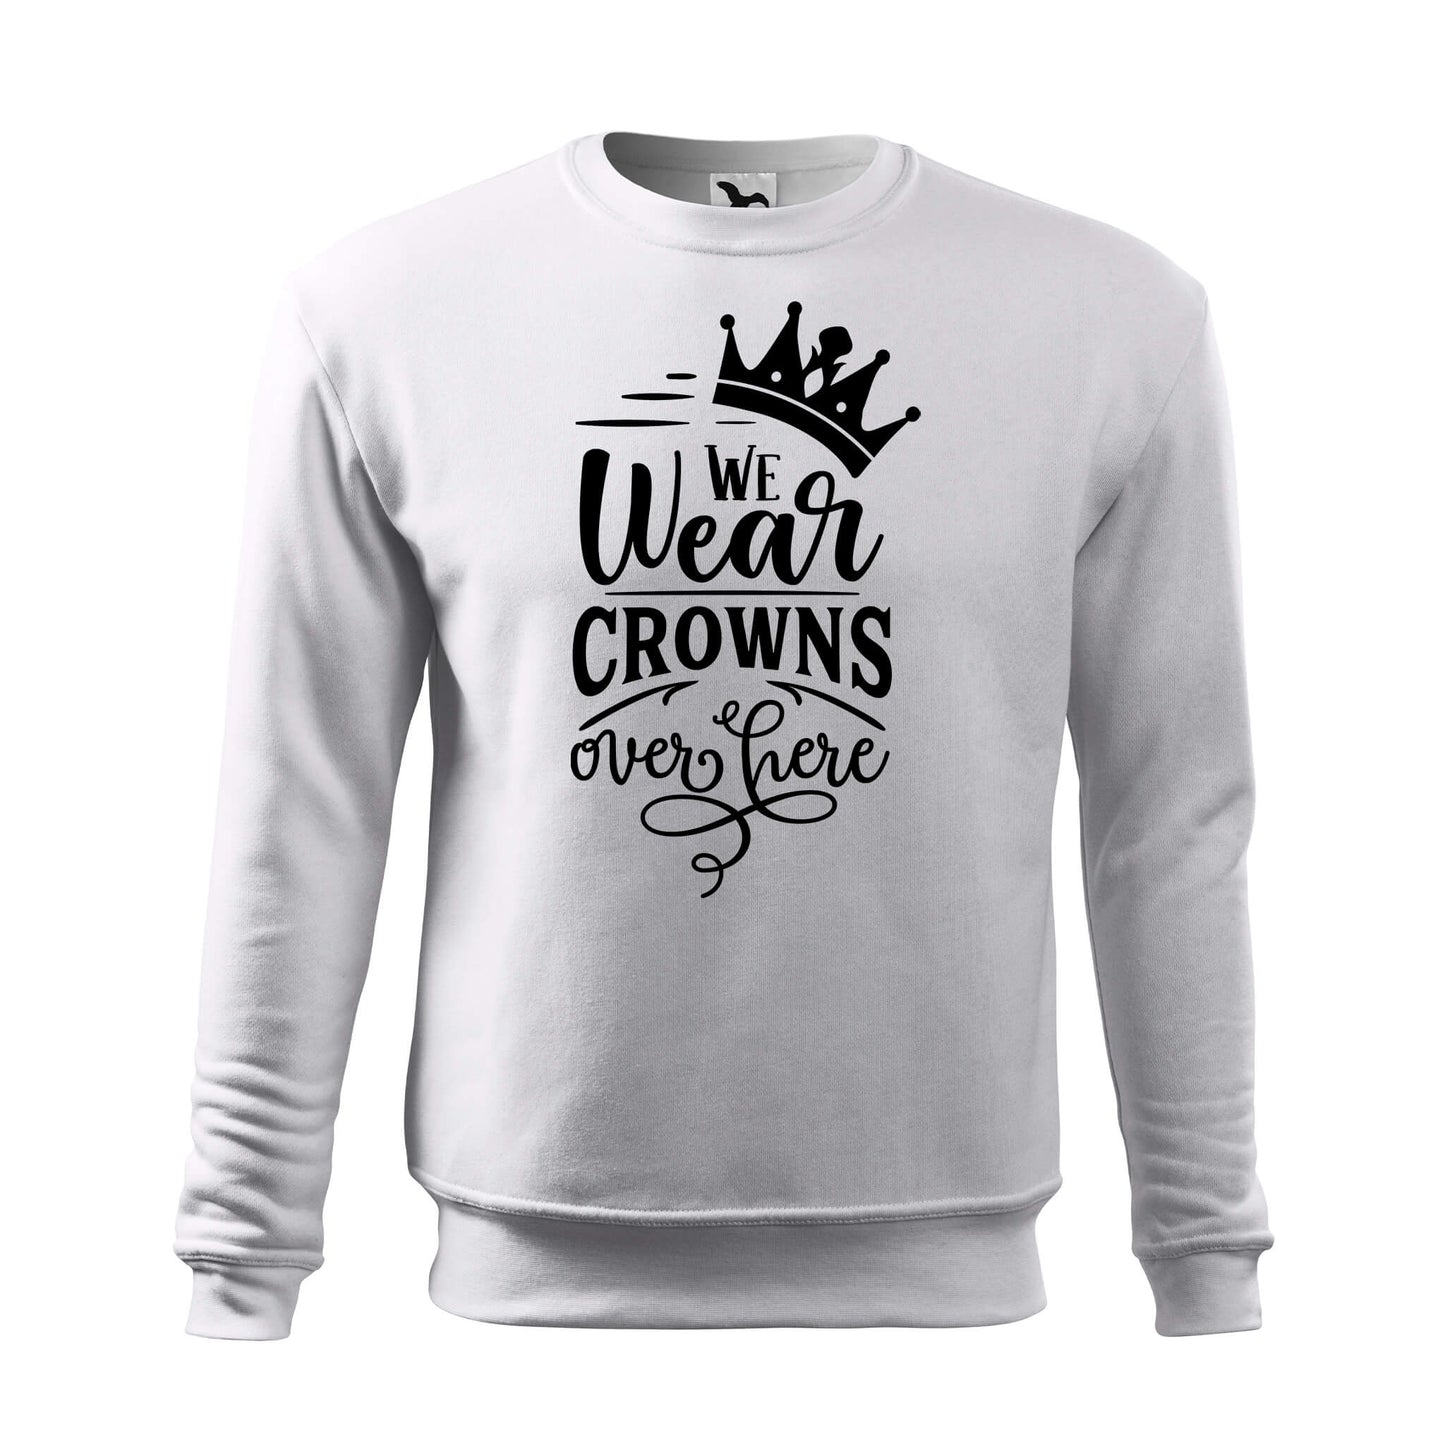 We wear crowns sweatshirt - rvdesignprint